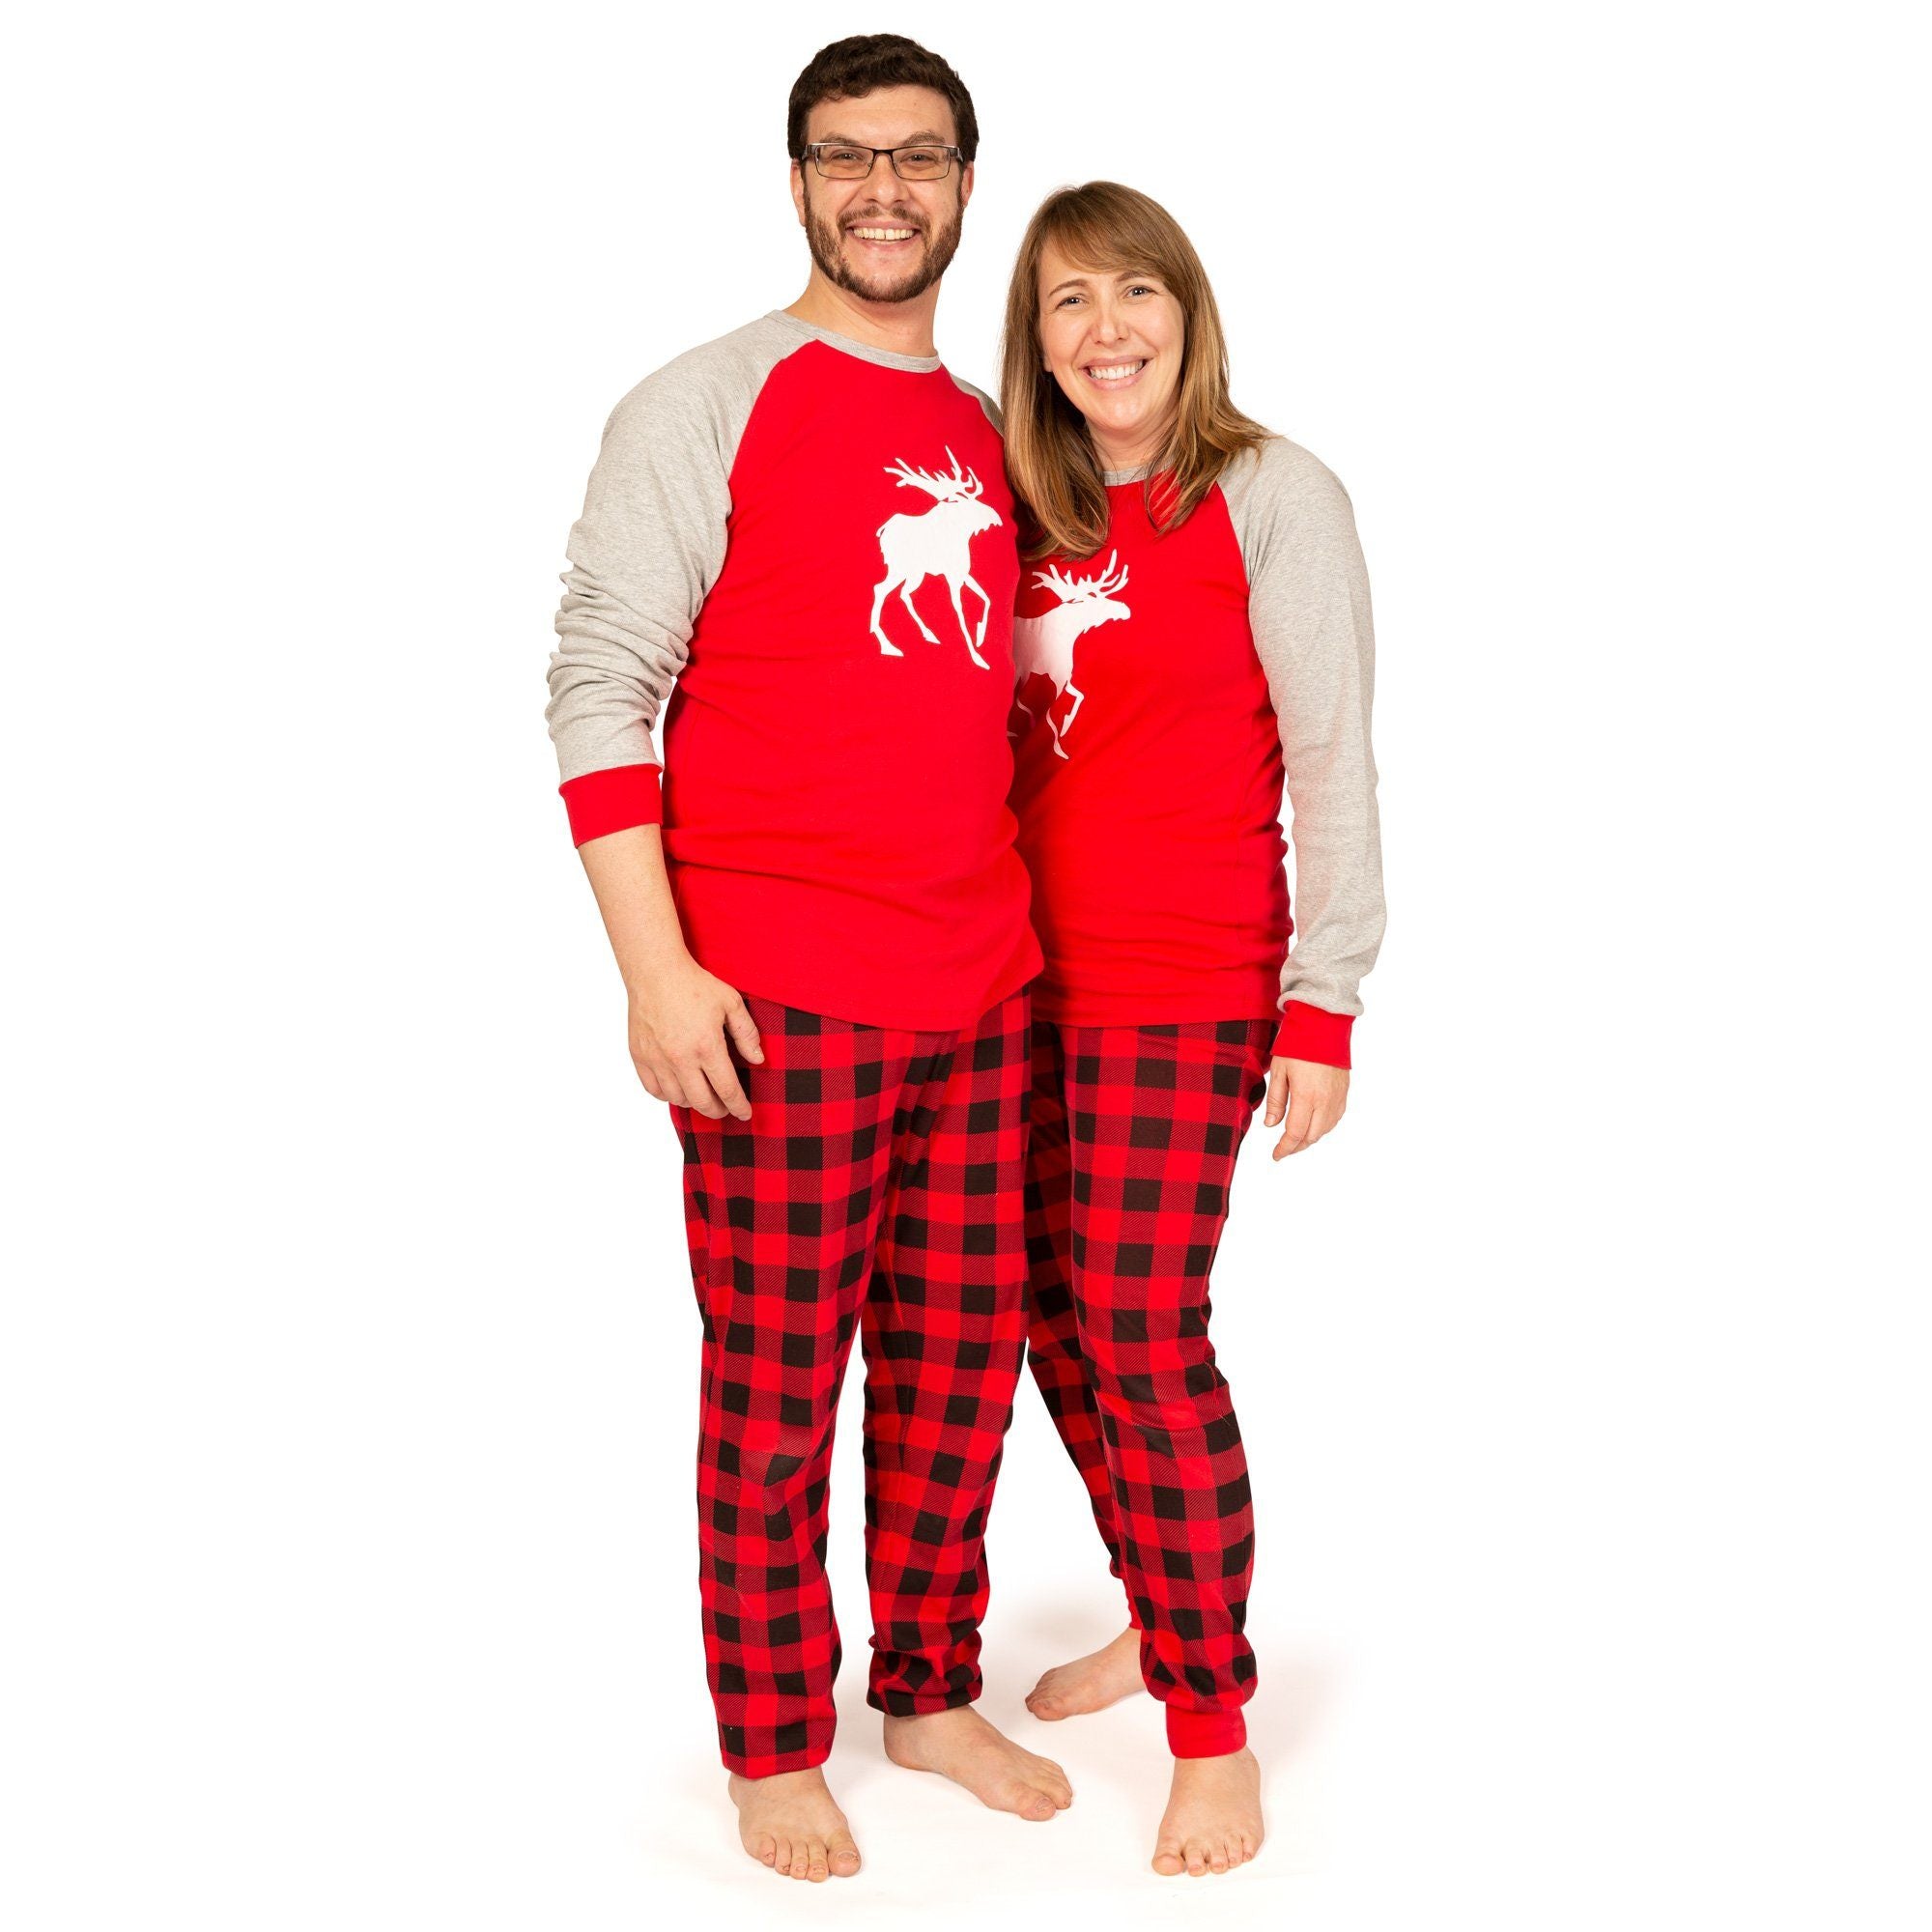 Stretch knit jogger pyjama pants - Christmas moose on plaid - Plus